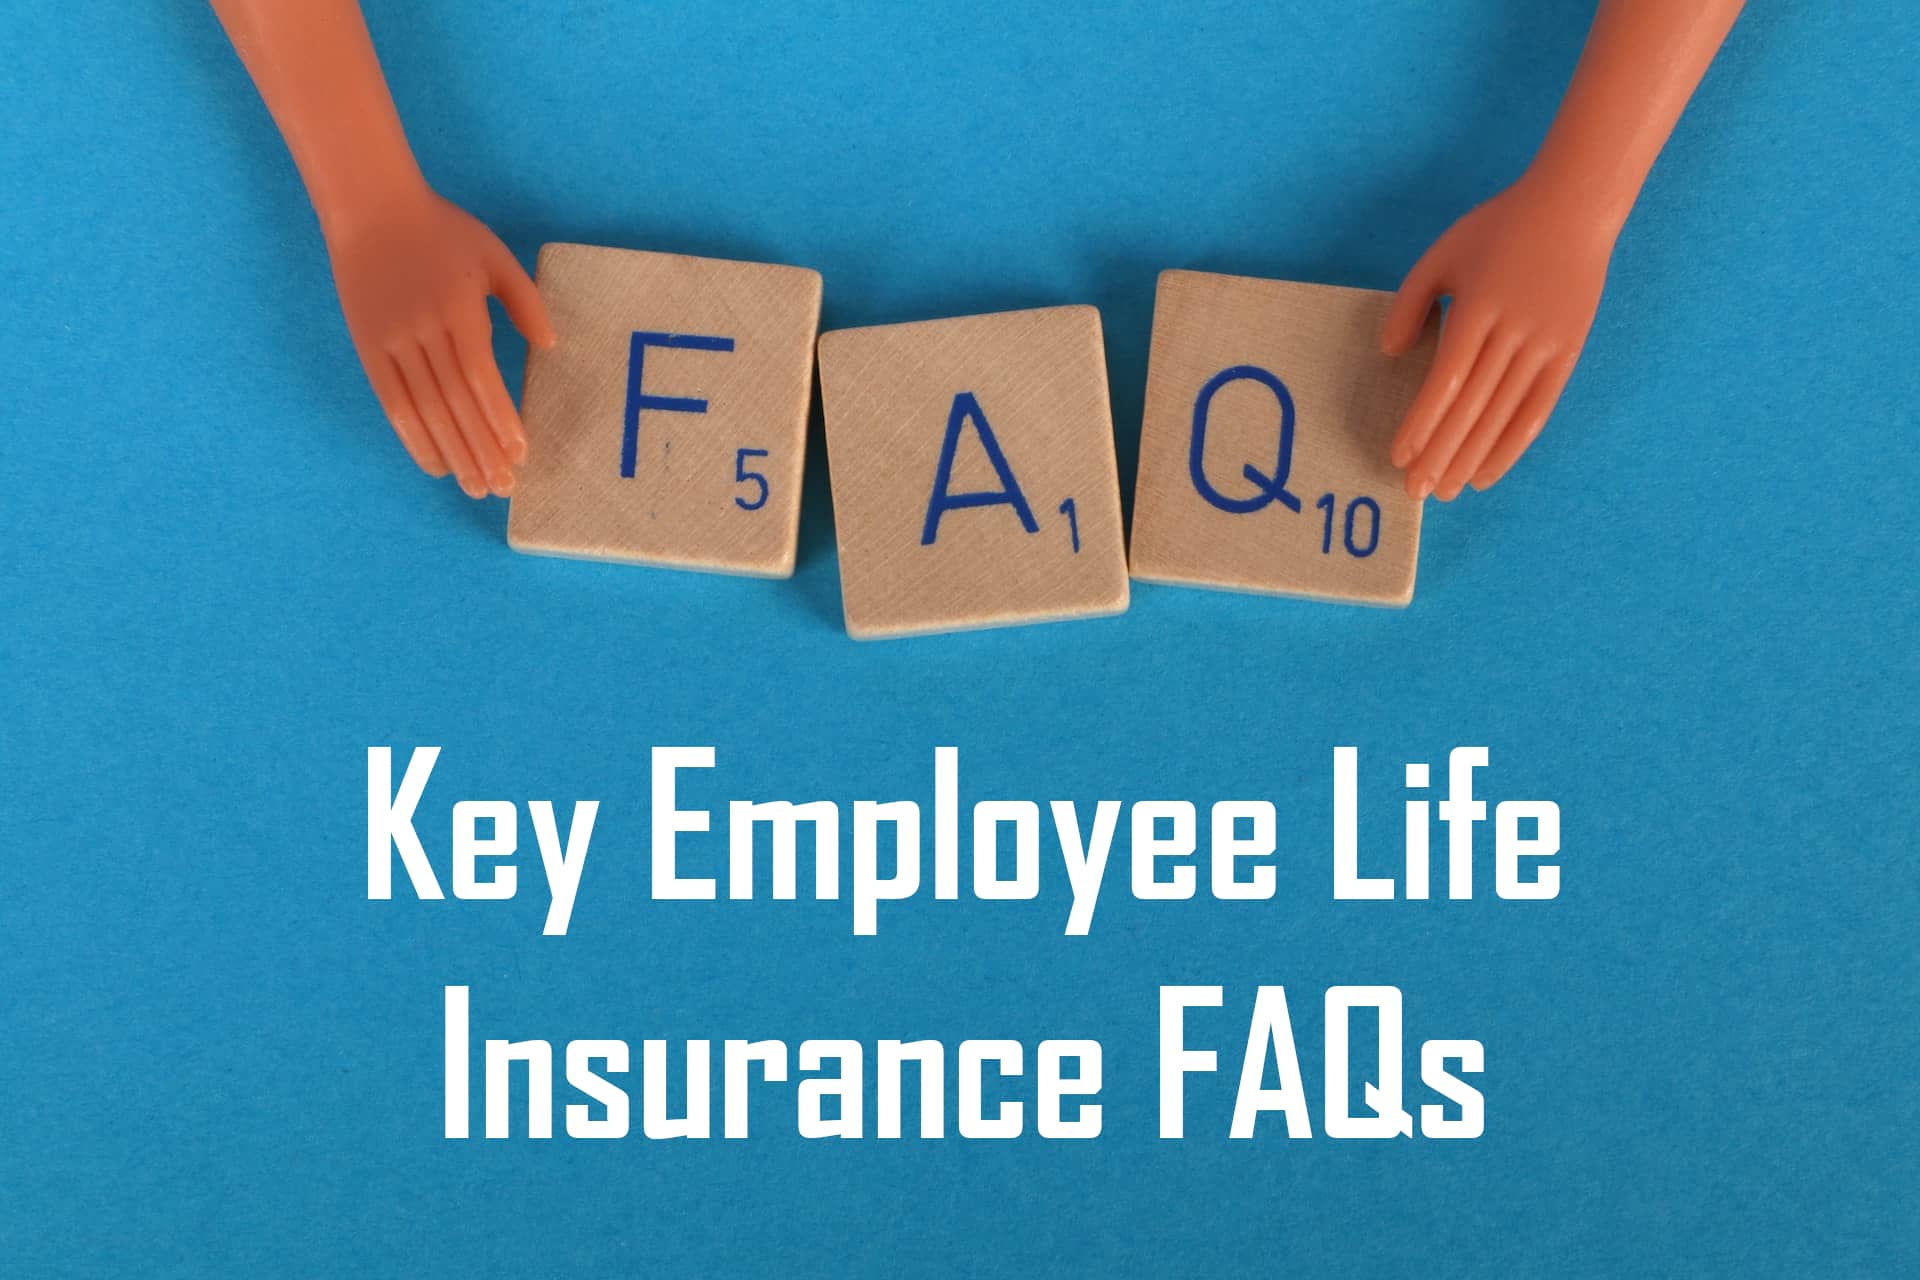 Key Employee Life Insurance FAQs